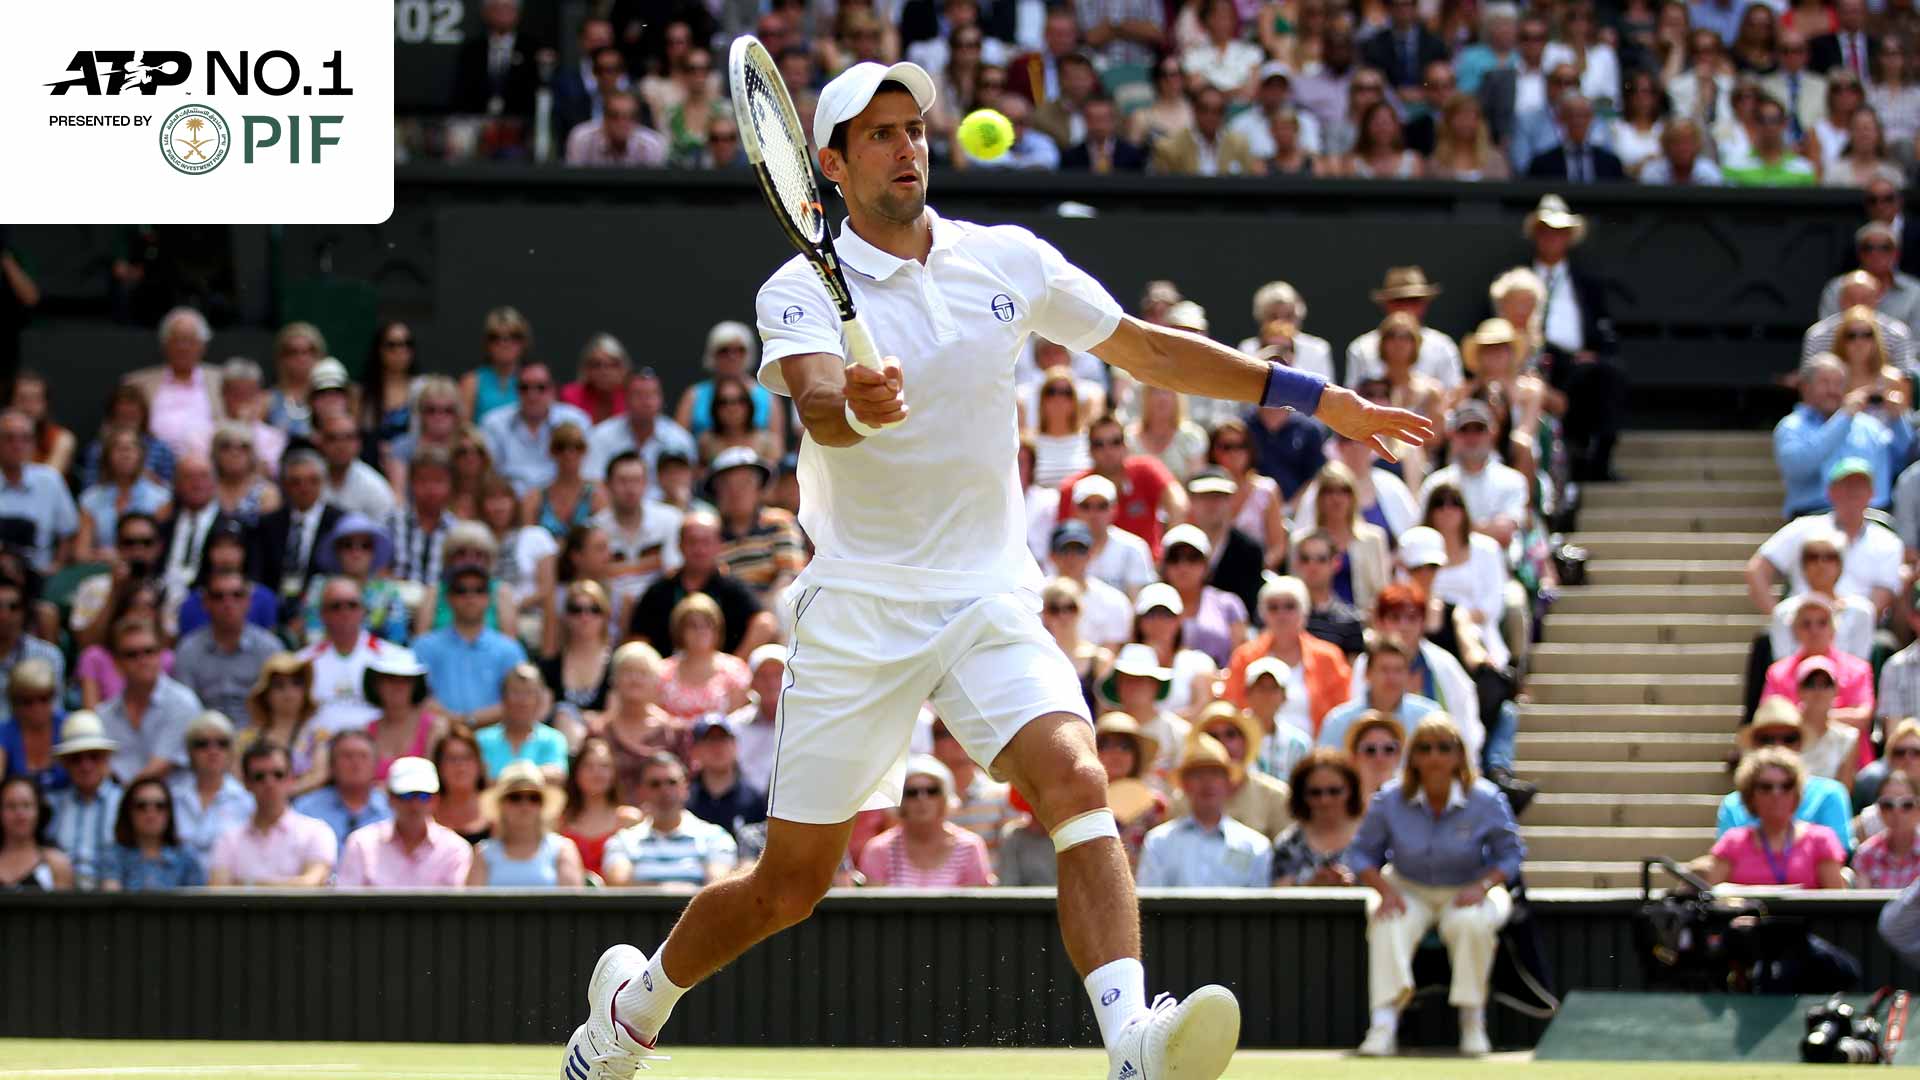 Novak Djokovic ascendió al No.1 del PIF ATP Rankings por primera vez tras ganar su primer Wimbledon en 2011.